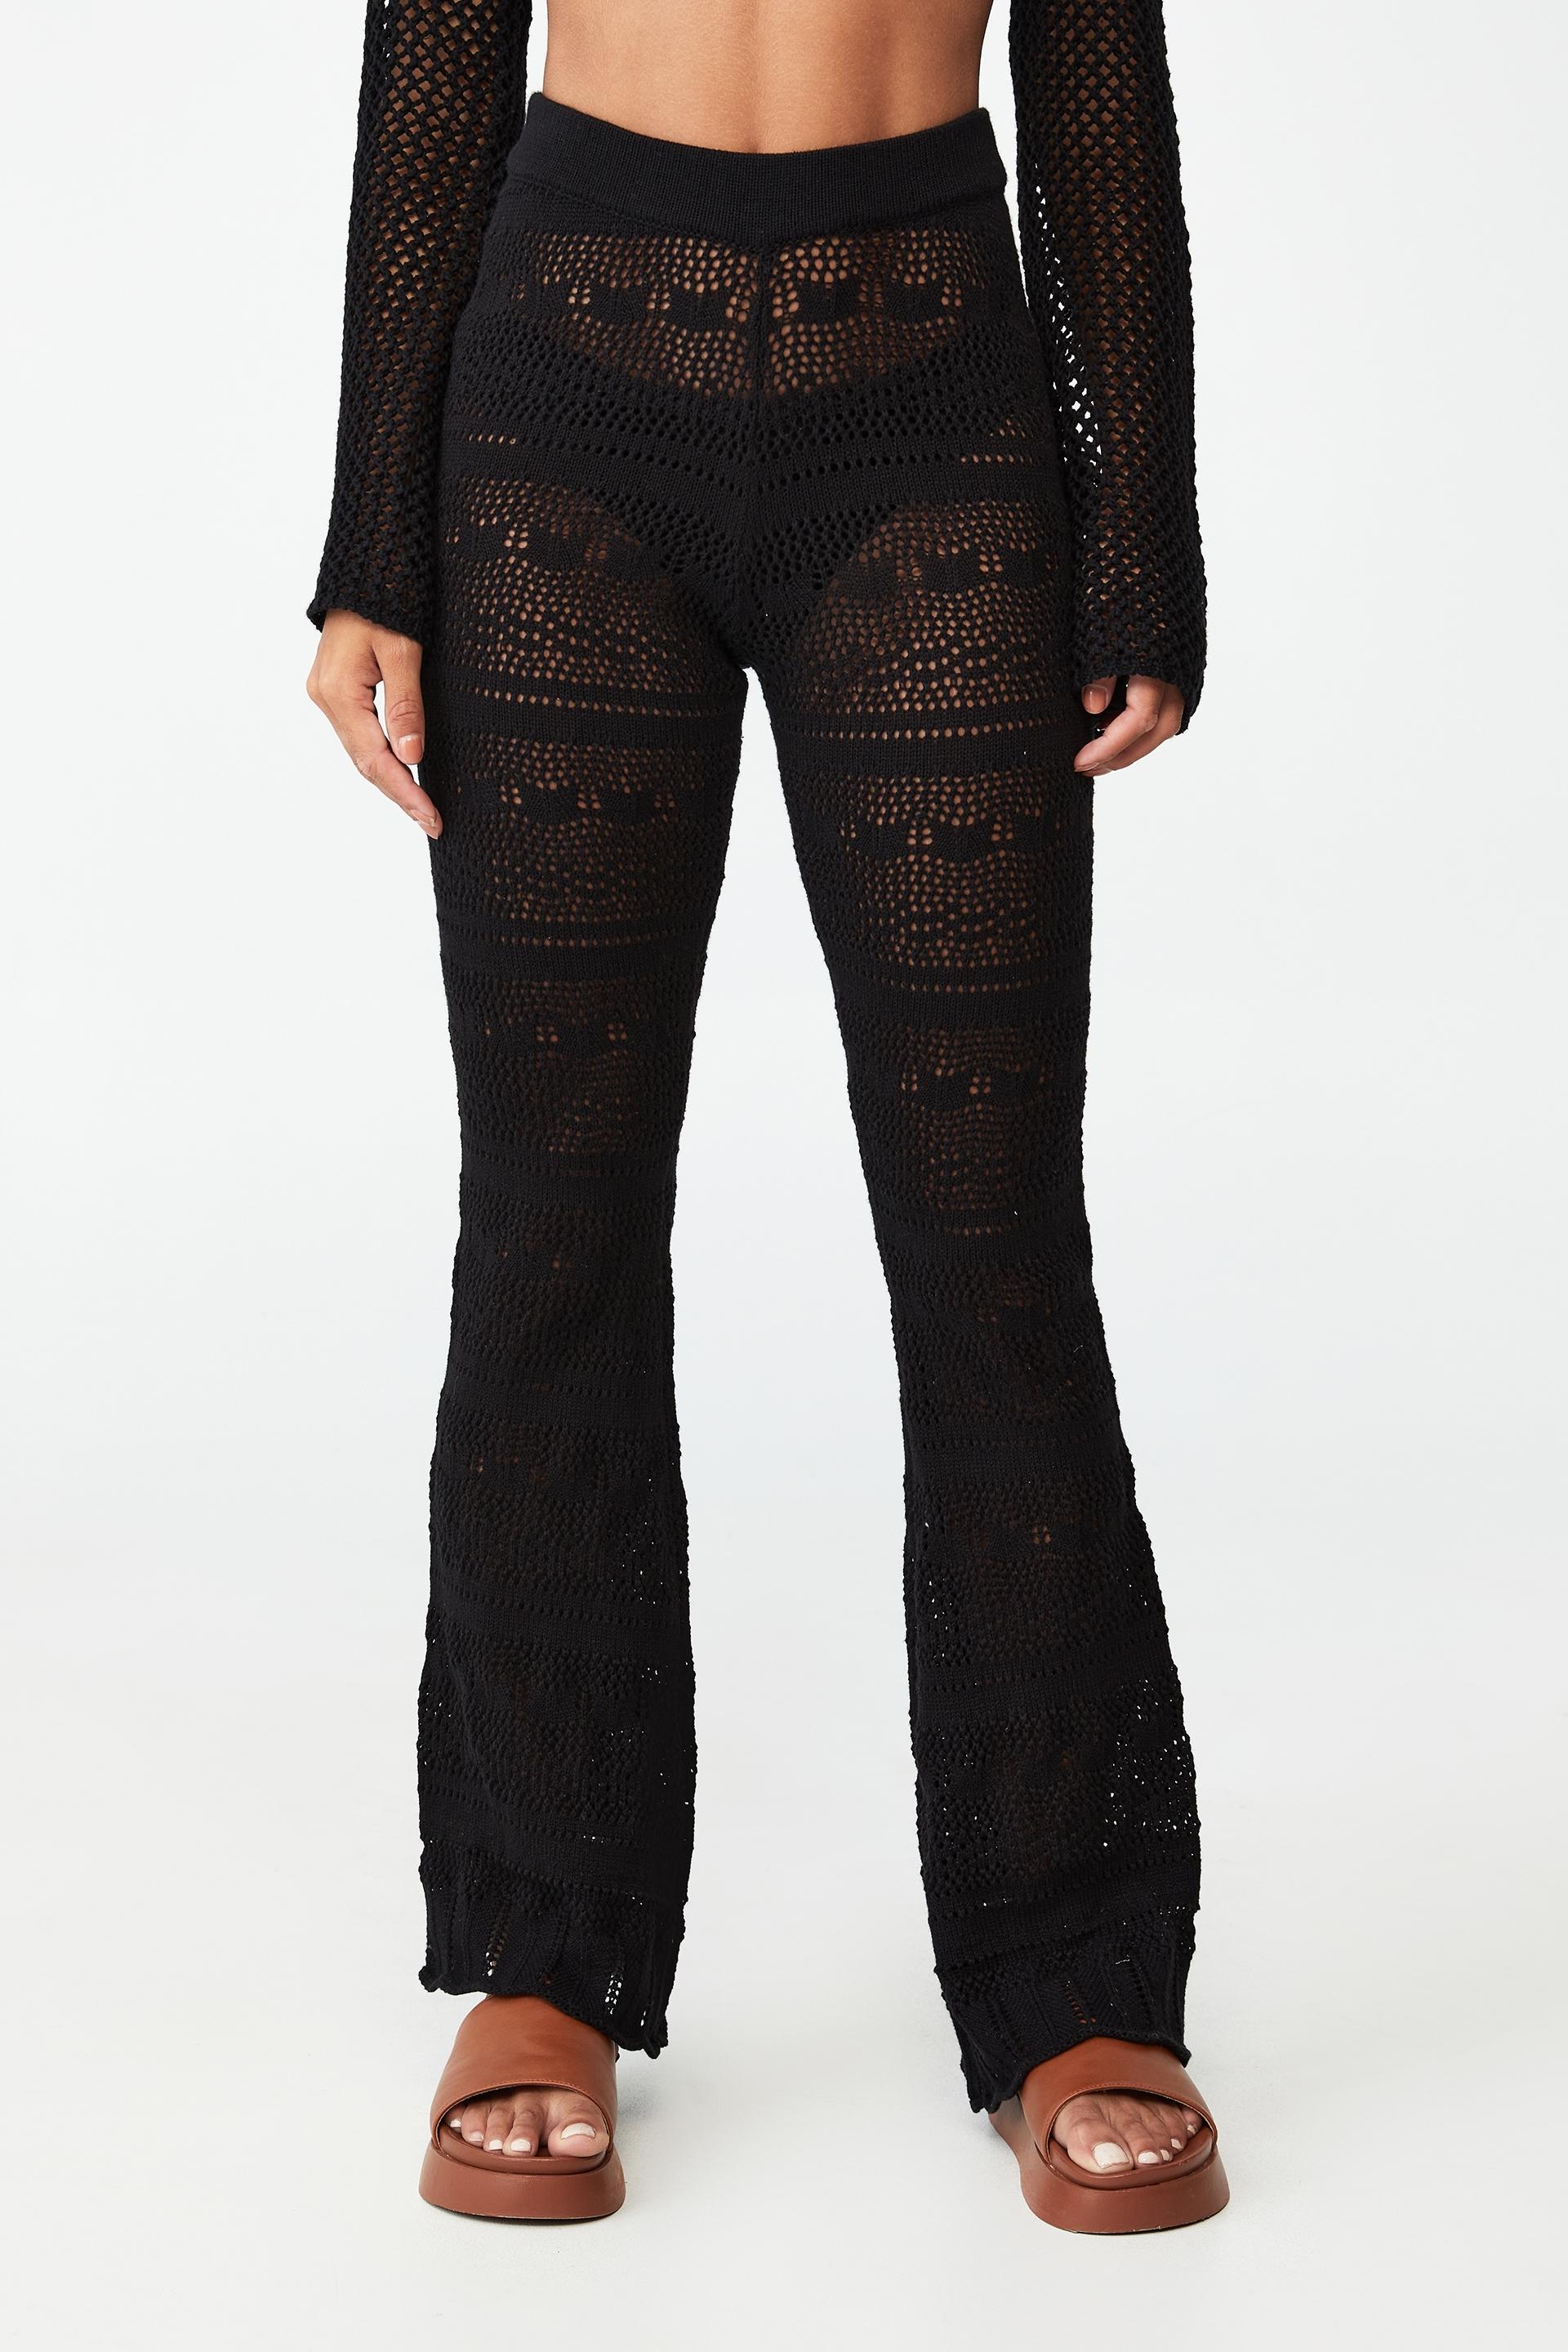 Pointelle textured pant - black Cotton On Trousers | Superbalist.com